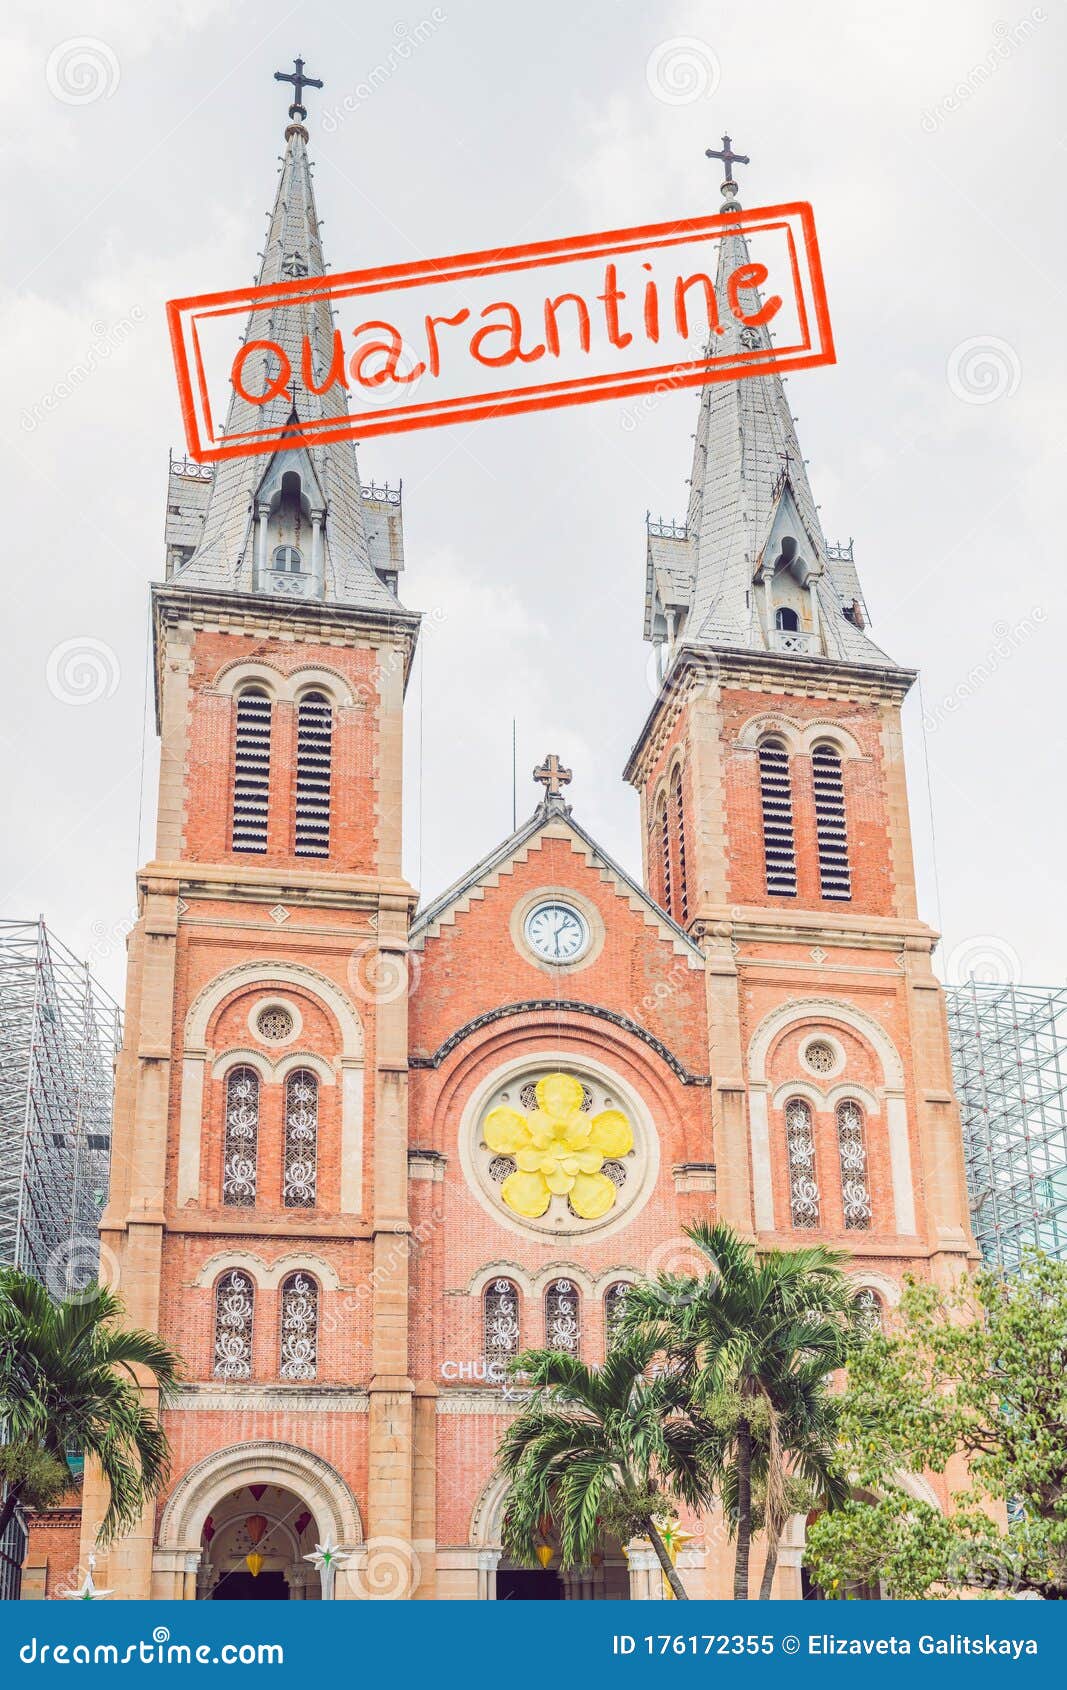 quarantine due to coronavirus epidemic covid19 notre dame de saigon cathedral, build in 1883 in ho chi minh city